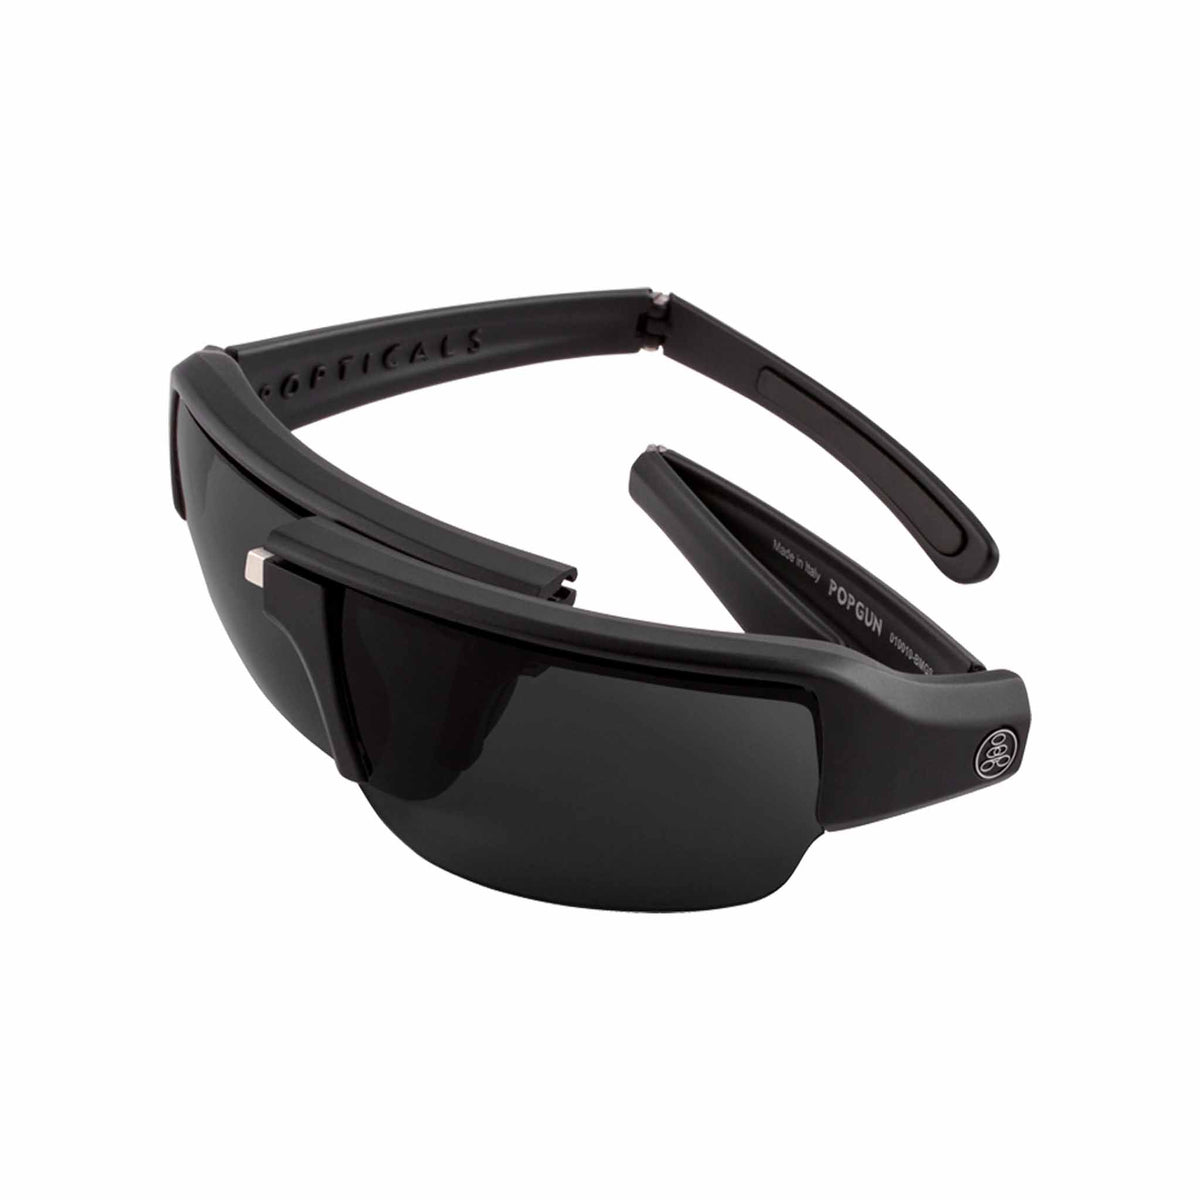 Popticals, Premium Compact Sunglasses, PopGun, 010010-BMGP, Polarized Sunglasses, Matte Black Frame, Gray Lenses, Spider View